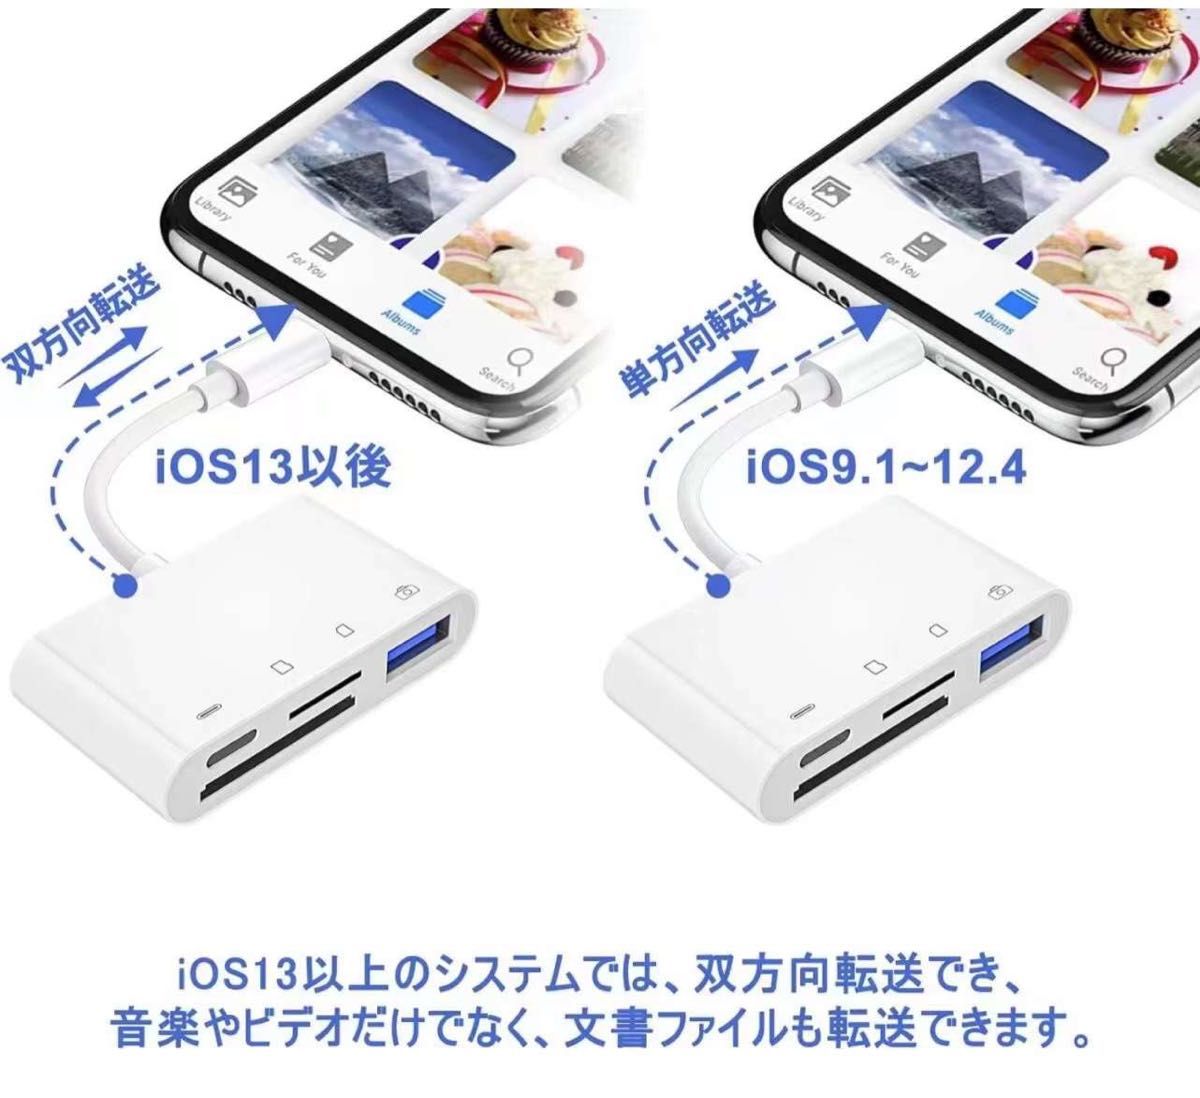 iPhone/iPad用 SD カードリーダー lightning用 4in1 カメラアダプタ高速双方向データ転送と同時充電 